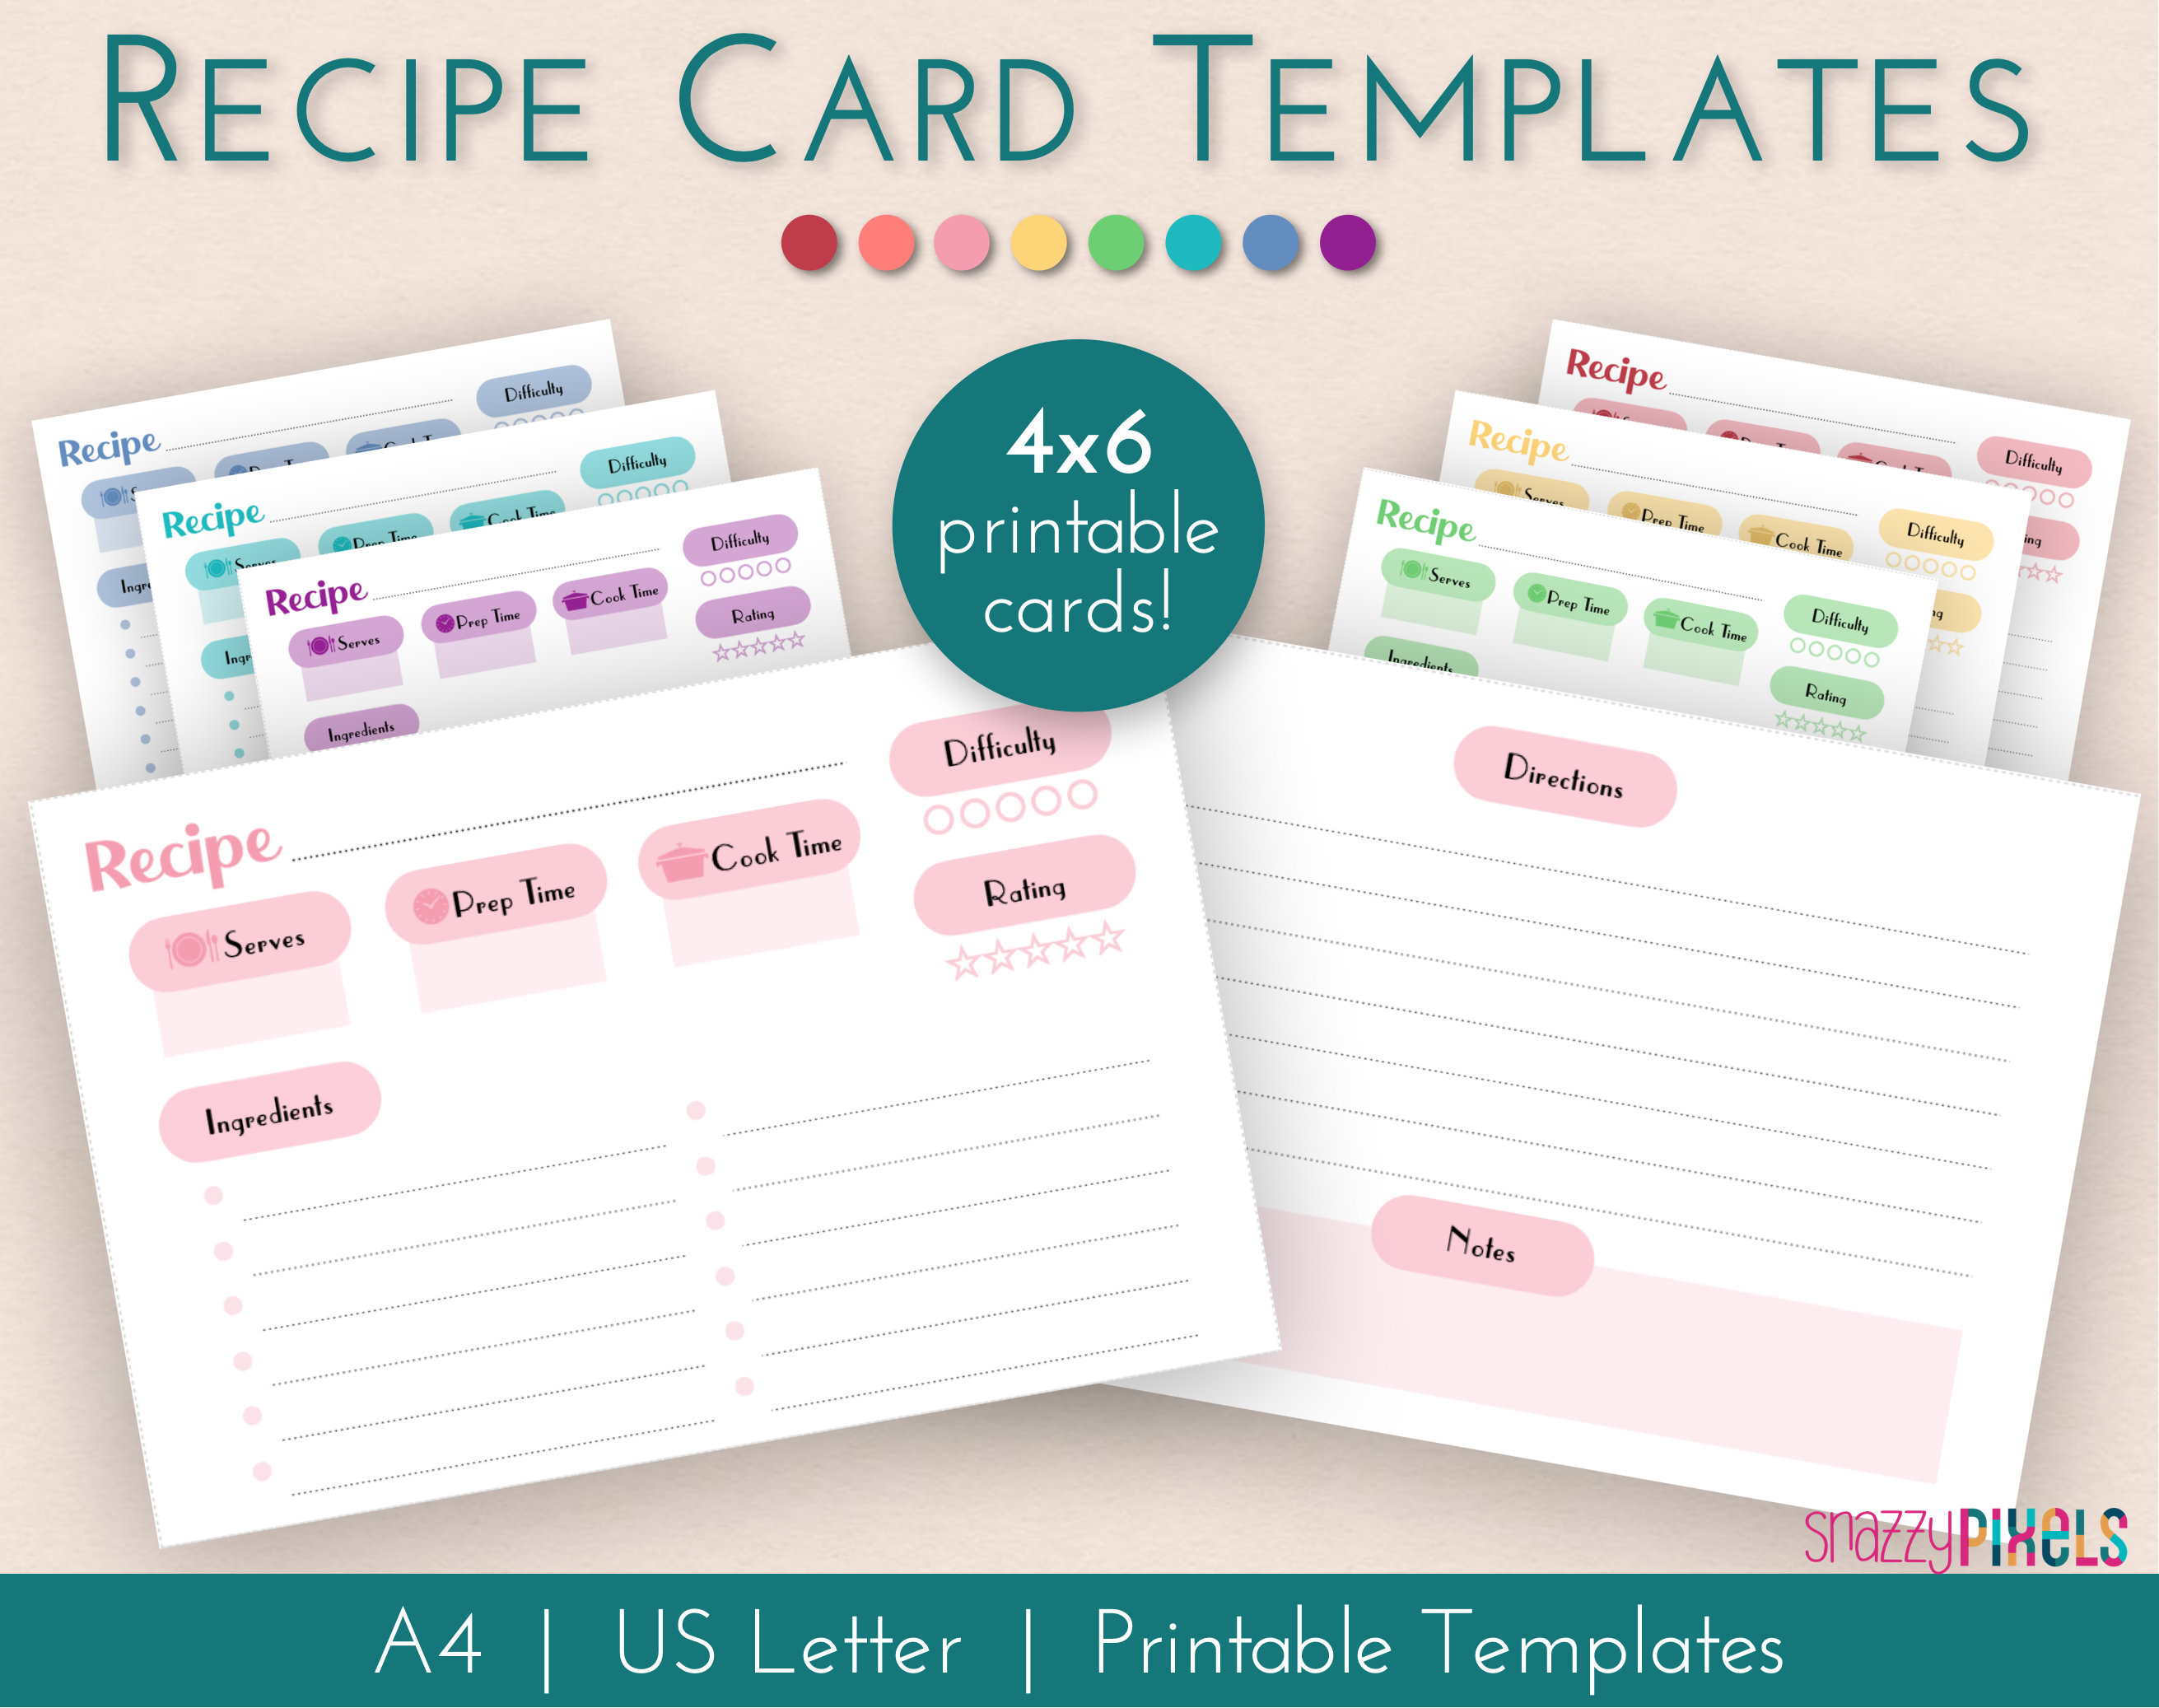 Create Your Own Class Recipe Book (Recipe Cards, Measurement Charts, Recipes)  - Classful